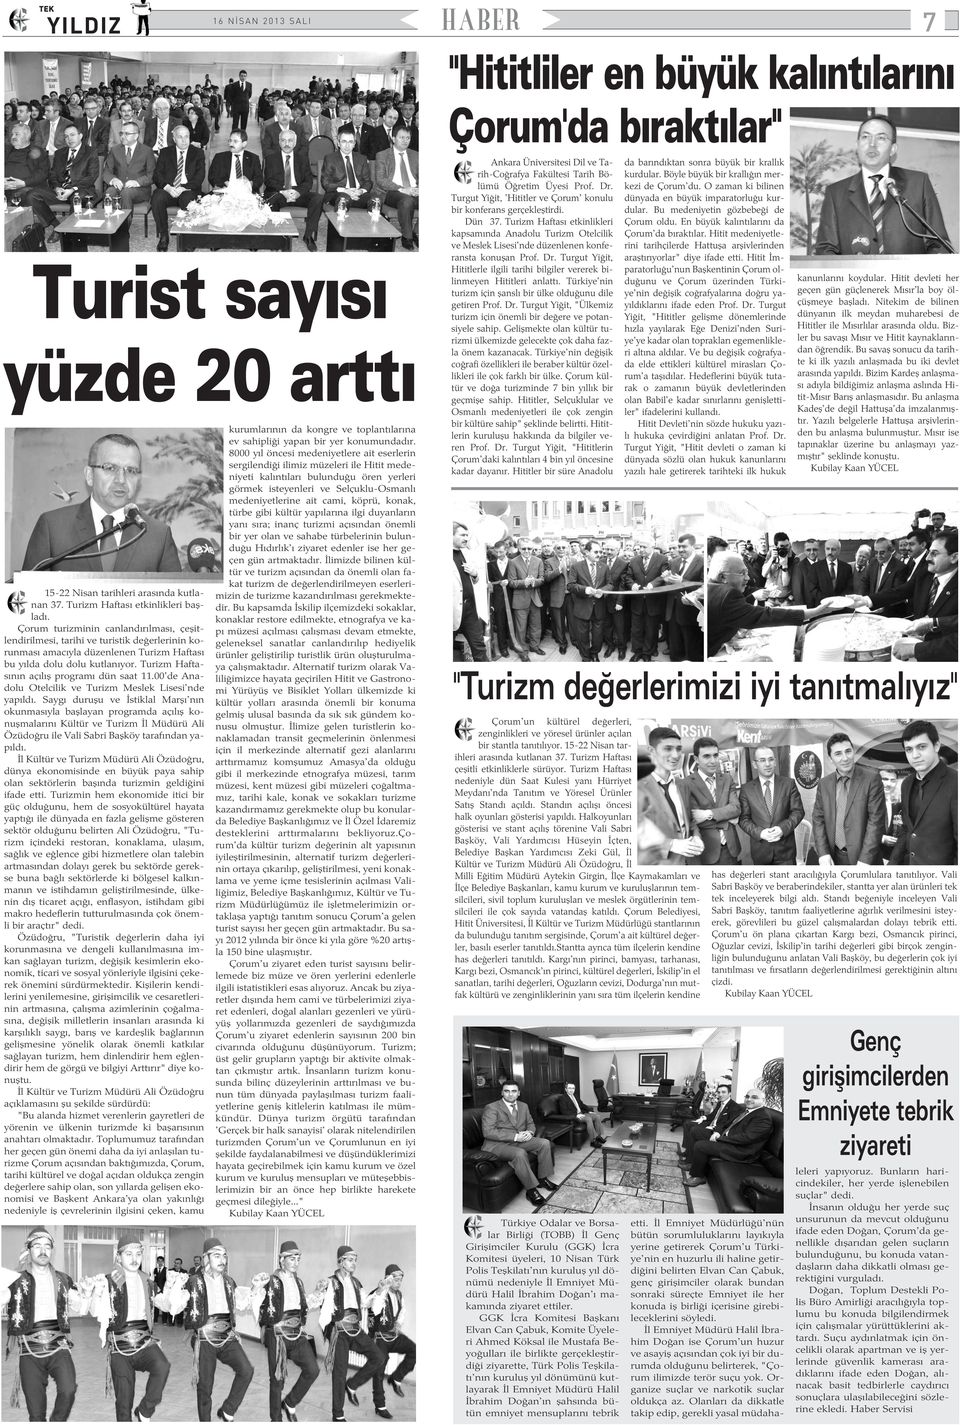 Turizm Haftasýnýn açýlýþ programý dün saat 11.00'de Anadolu Otelcilik ve Turizm Meslek Lisesi'nde yapýldý.